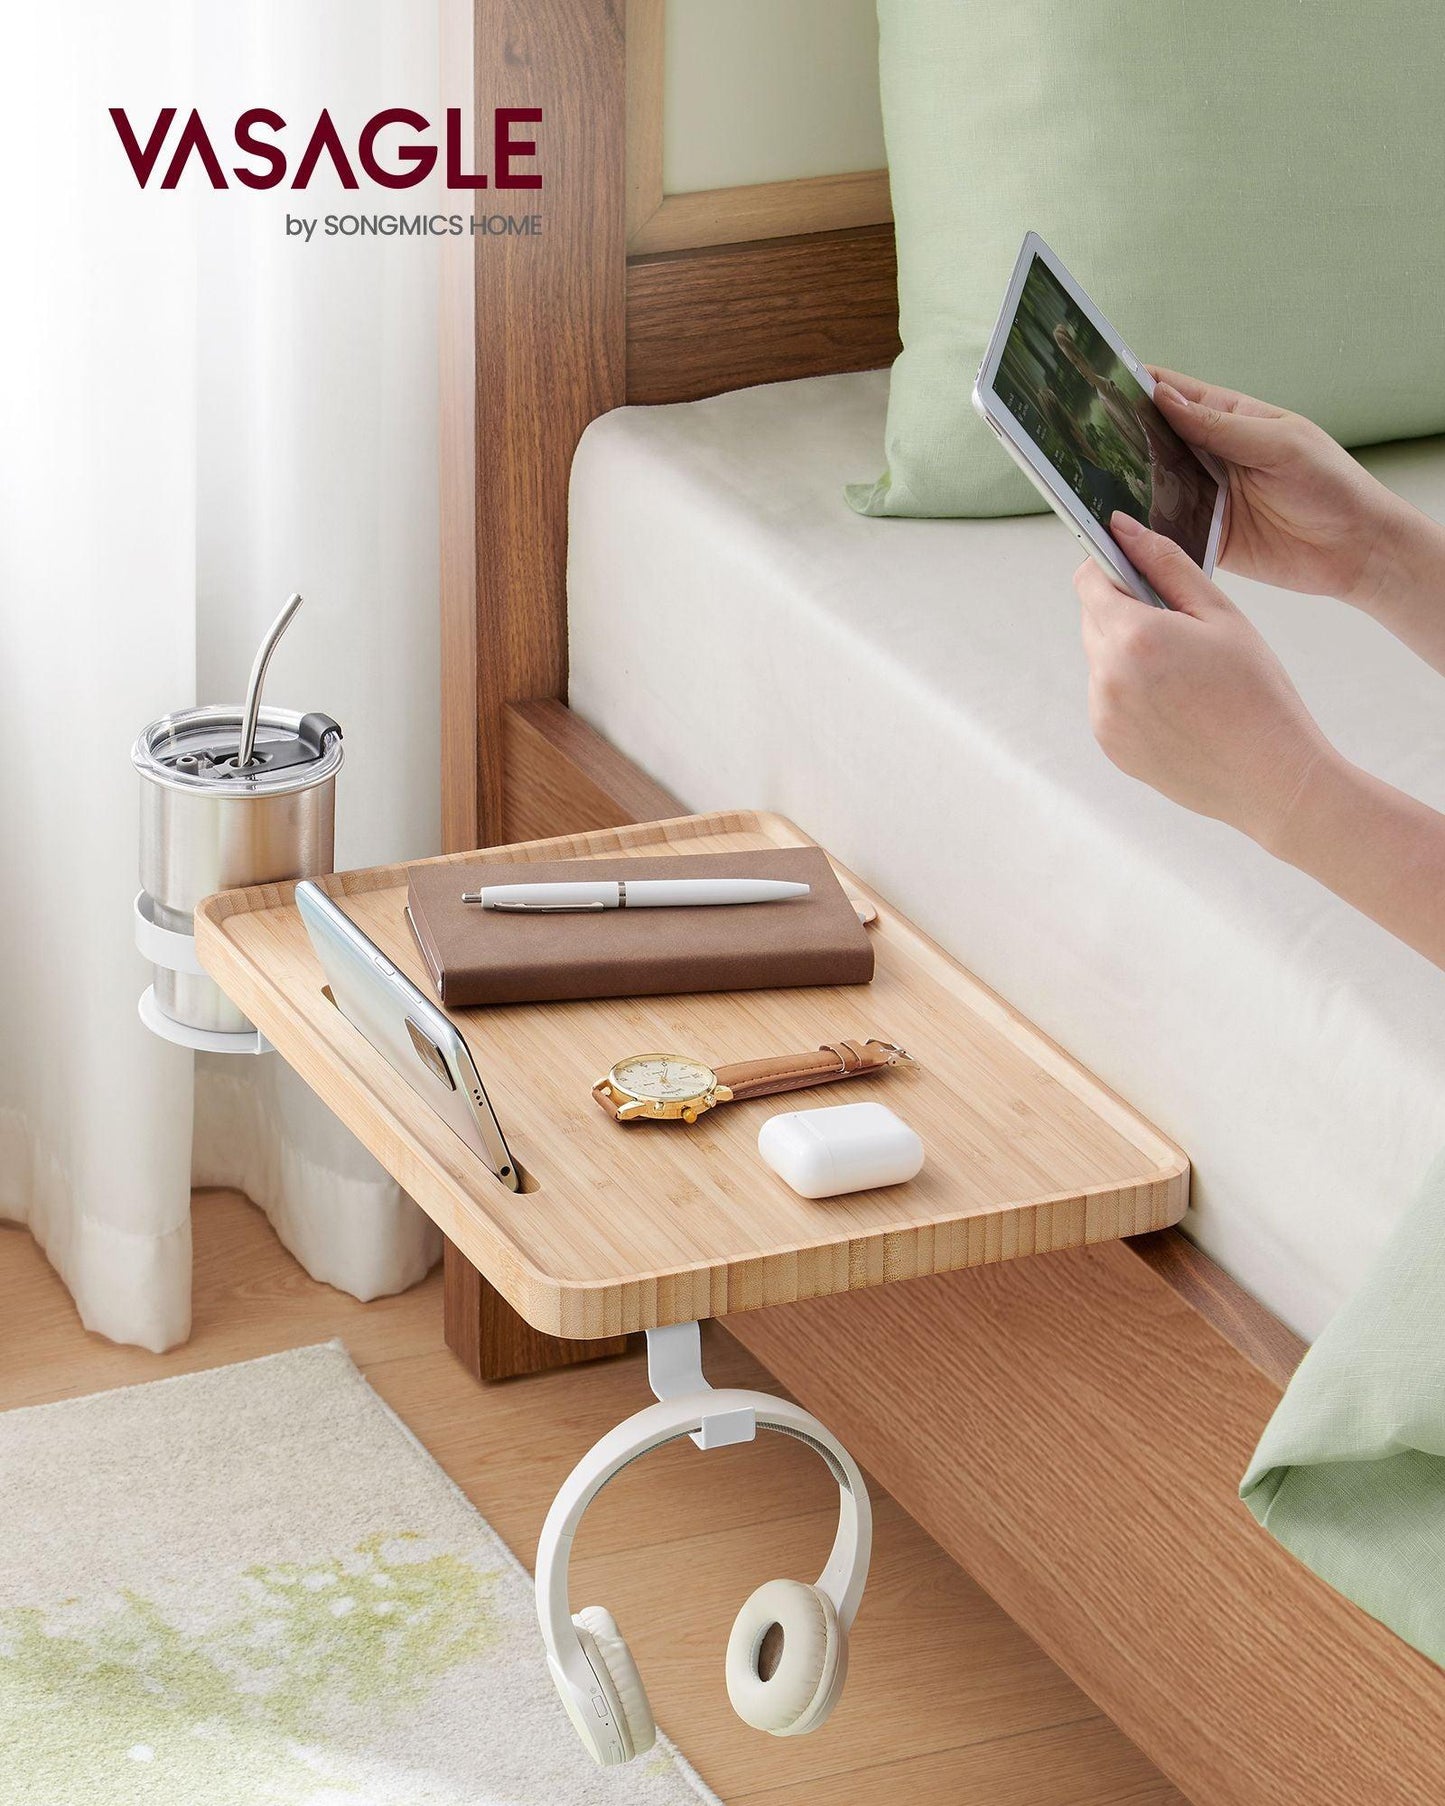 Bedside Shelf with Phone Slot, Cup Holder and Hook Natural Beige